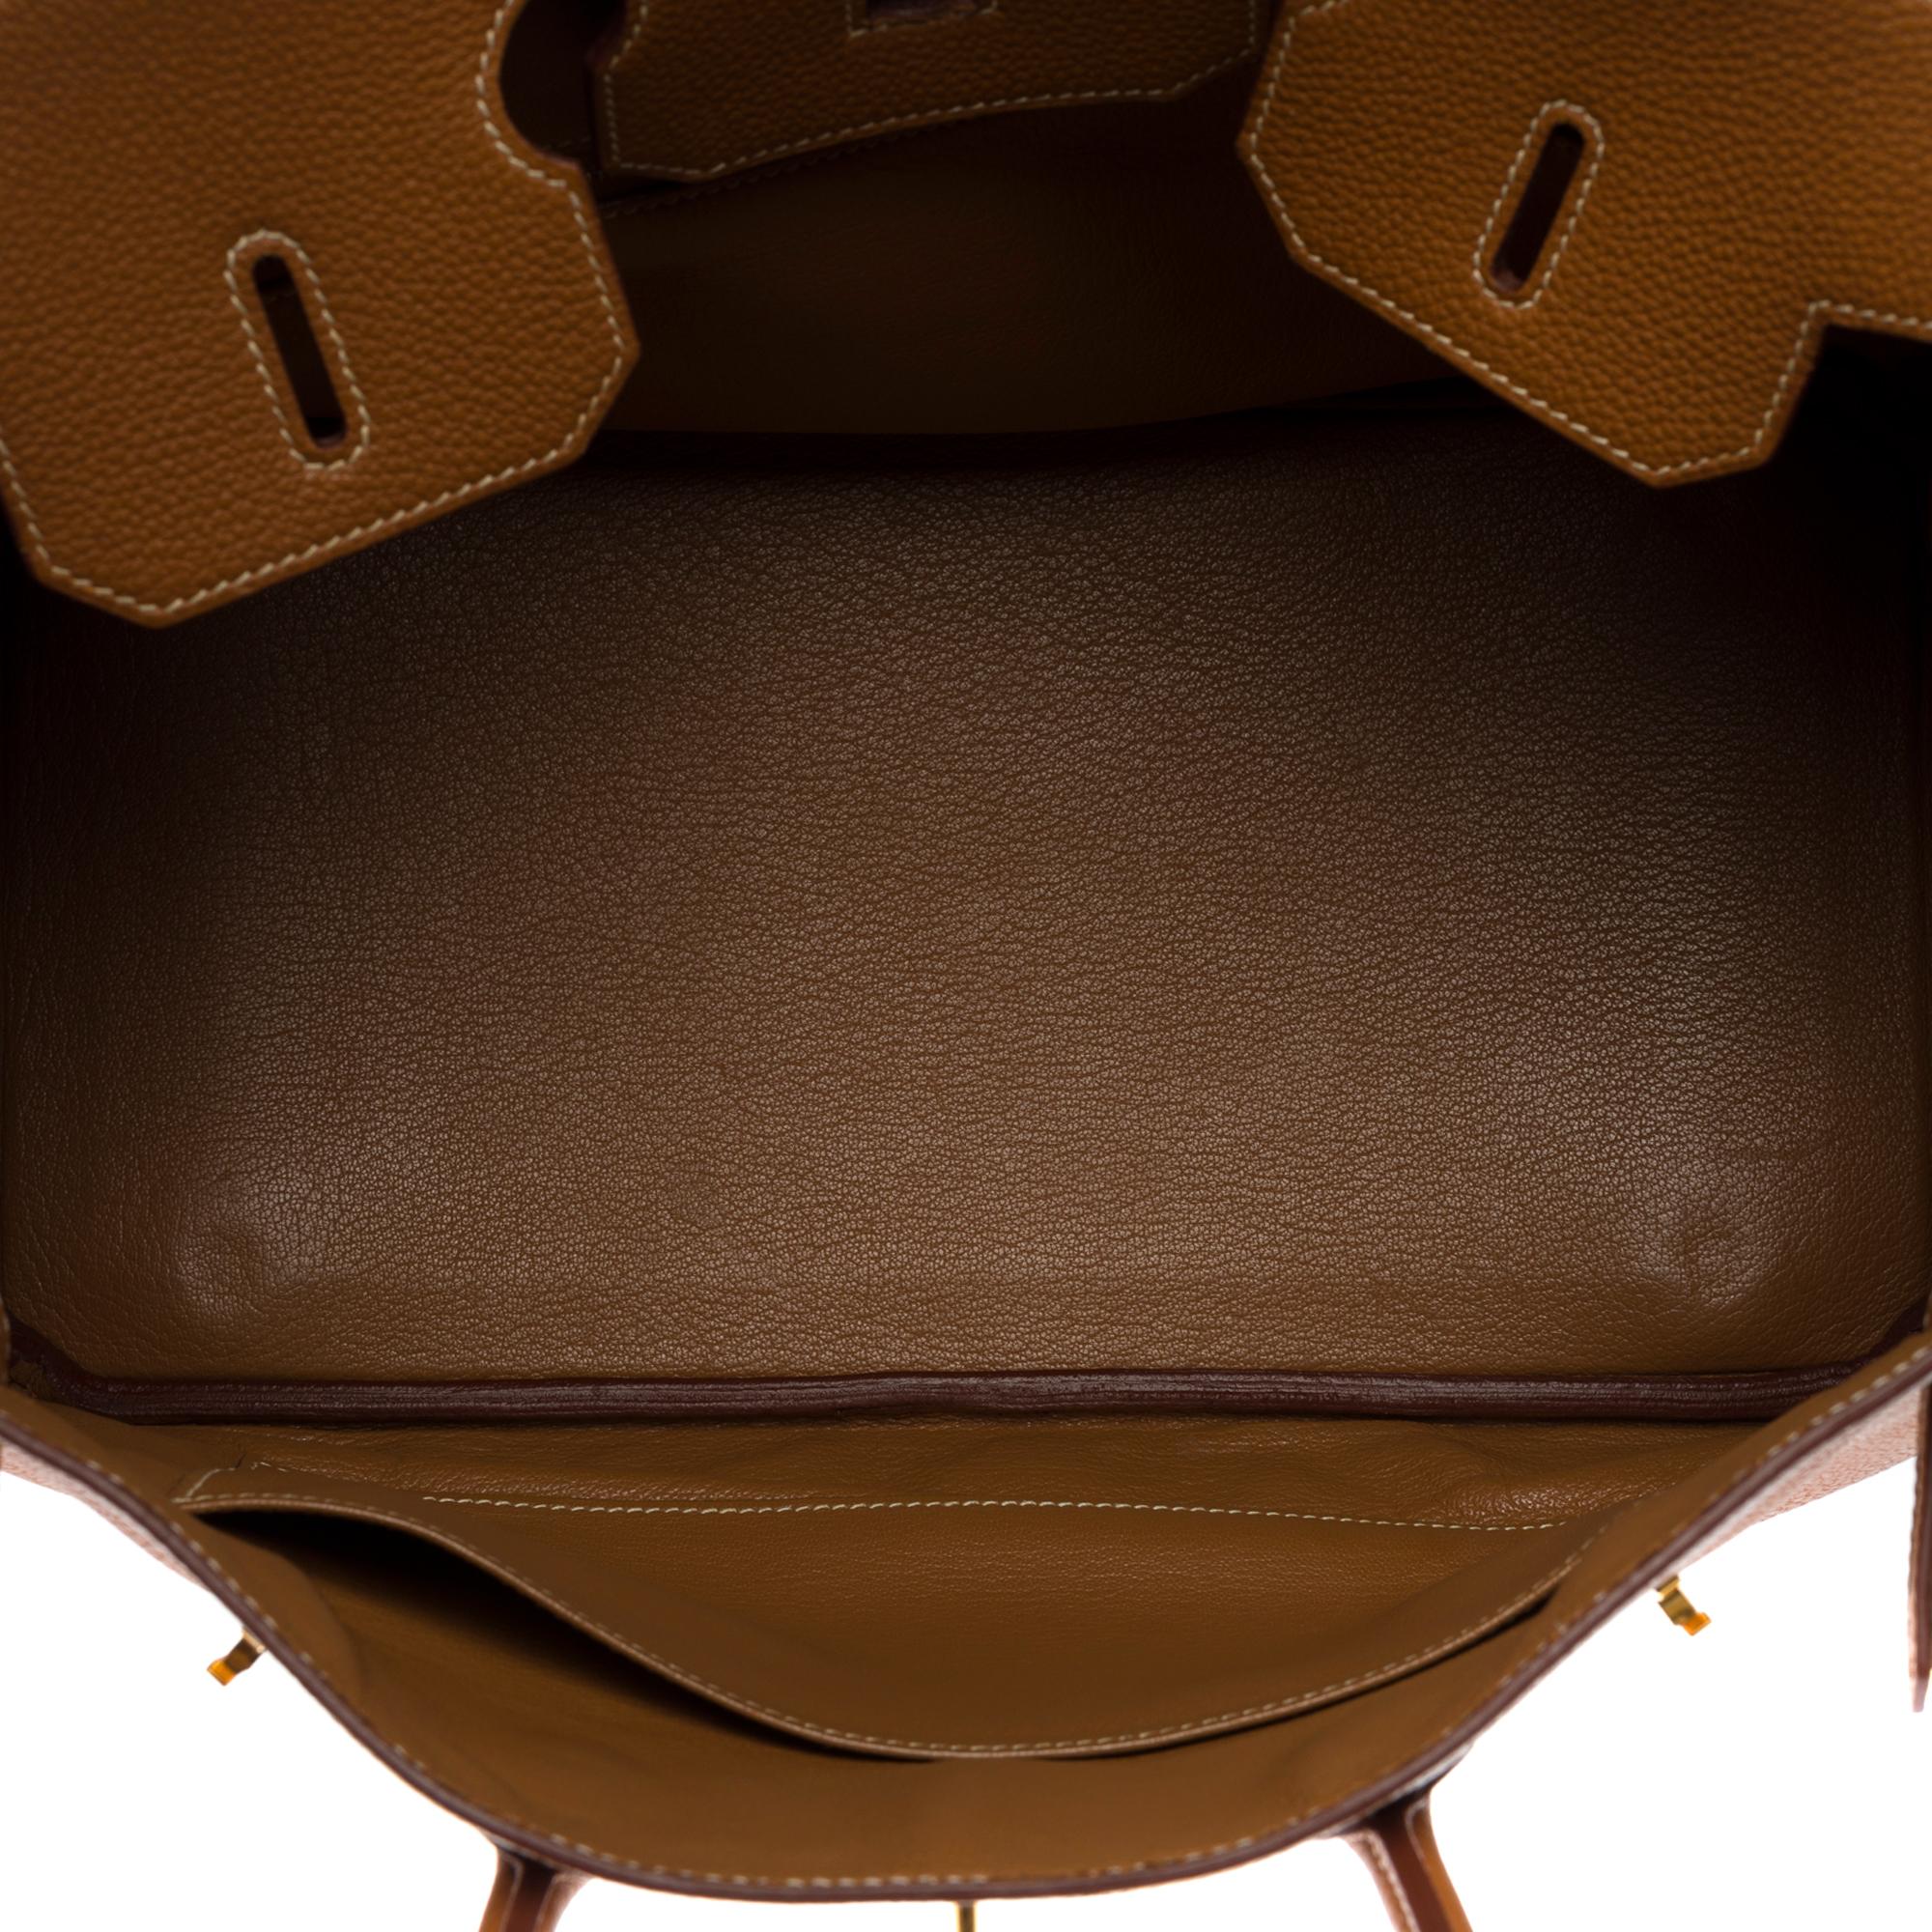 Amazing Hermès Birkin 35 handbag in Camel Togo leather, GHW 1